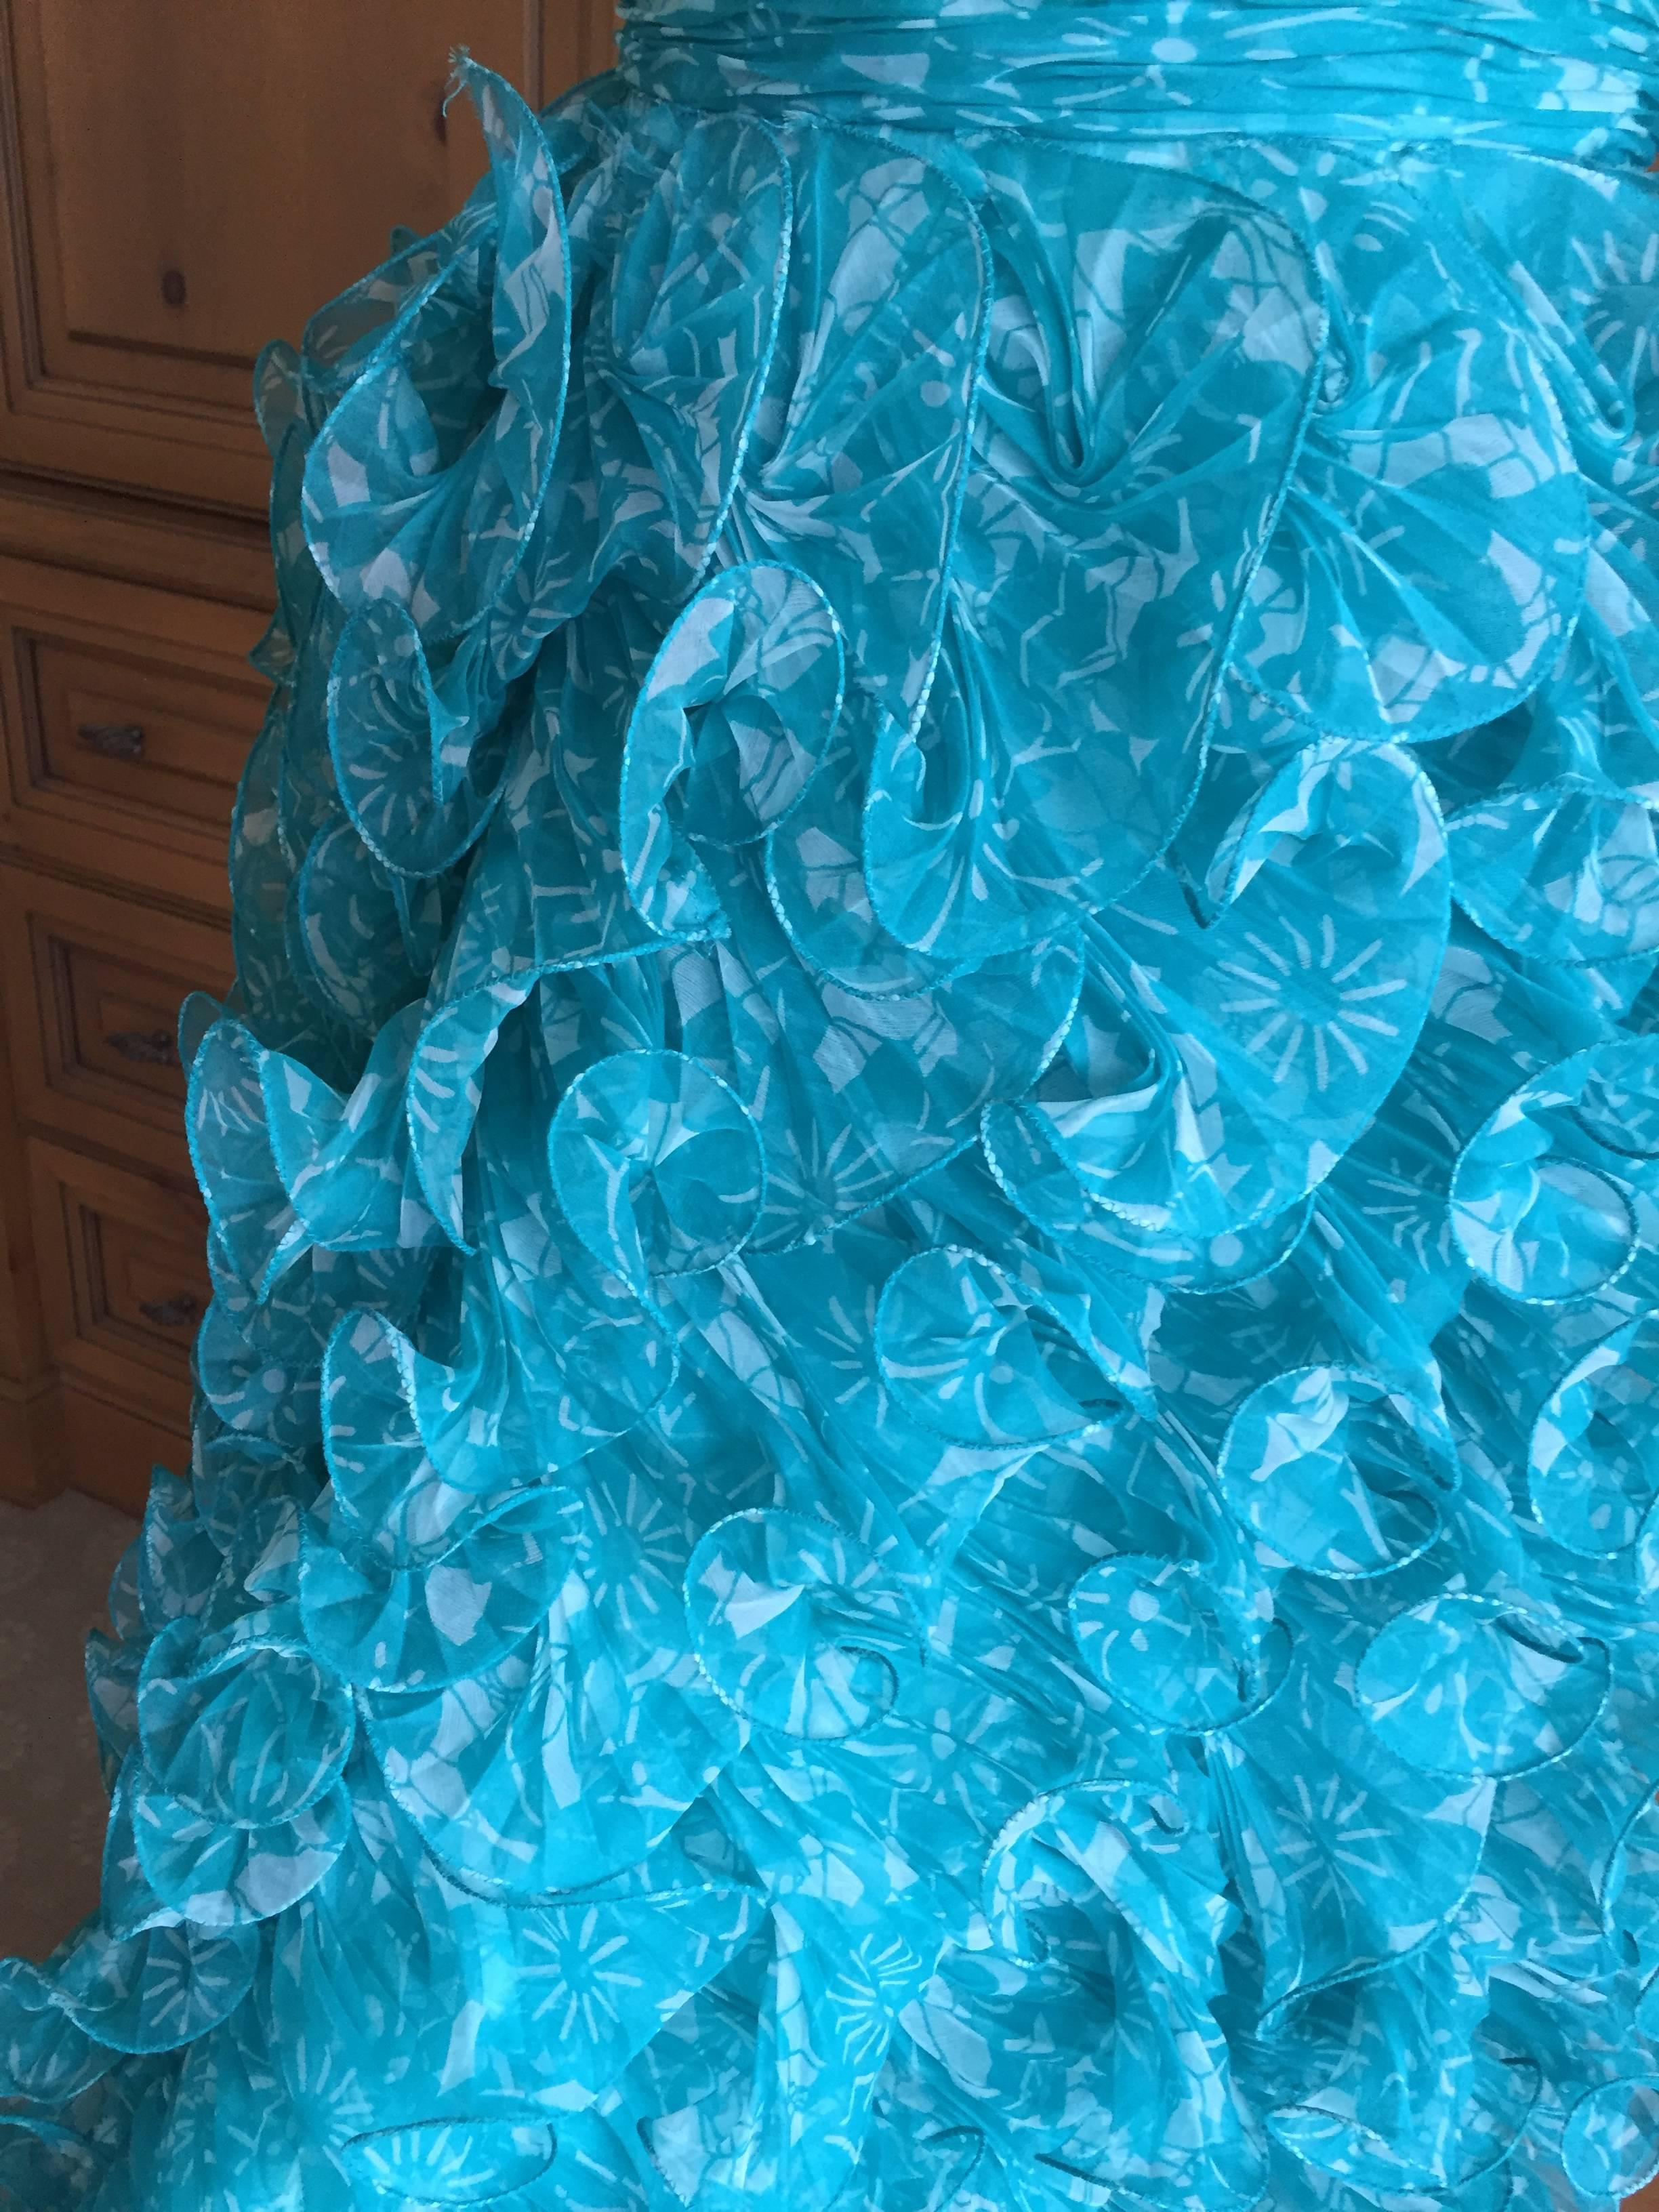 Women's Oscar de la Renta Turquoise Vintage Ruffled Evening Gown